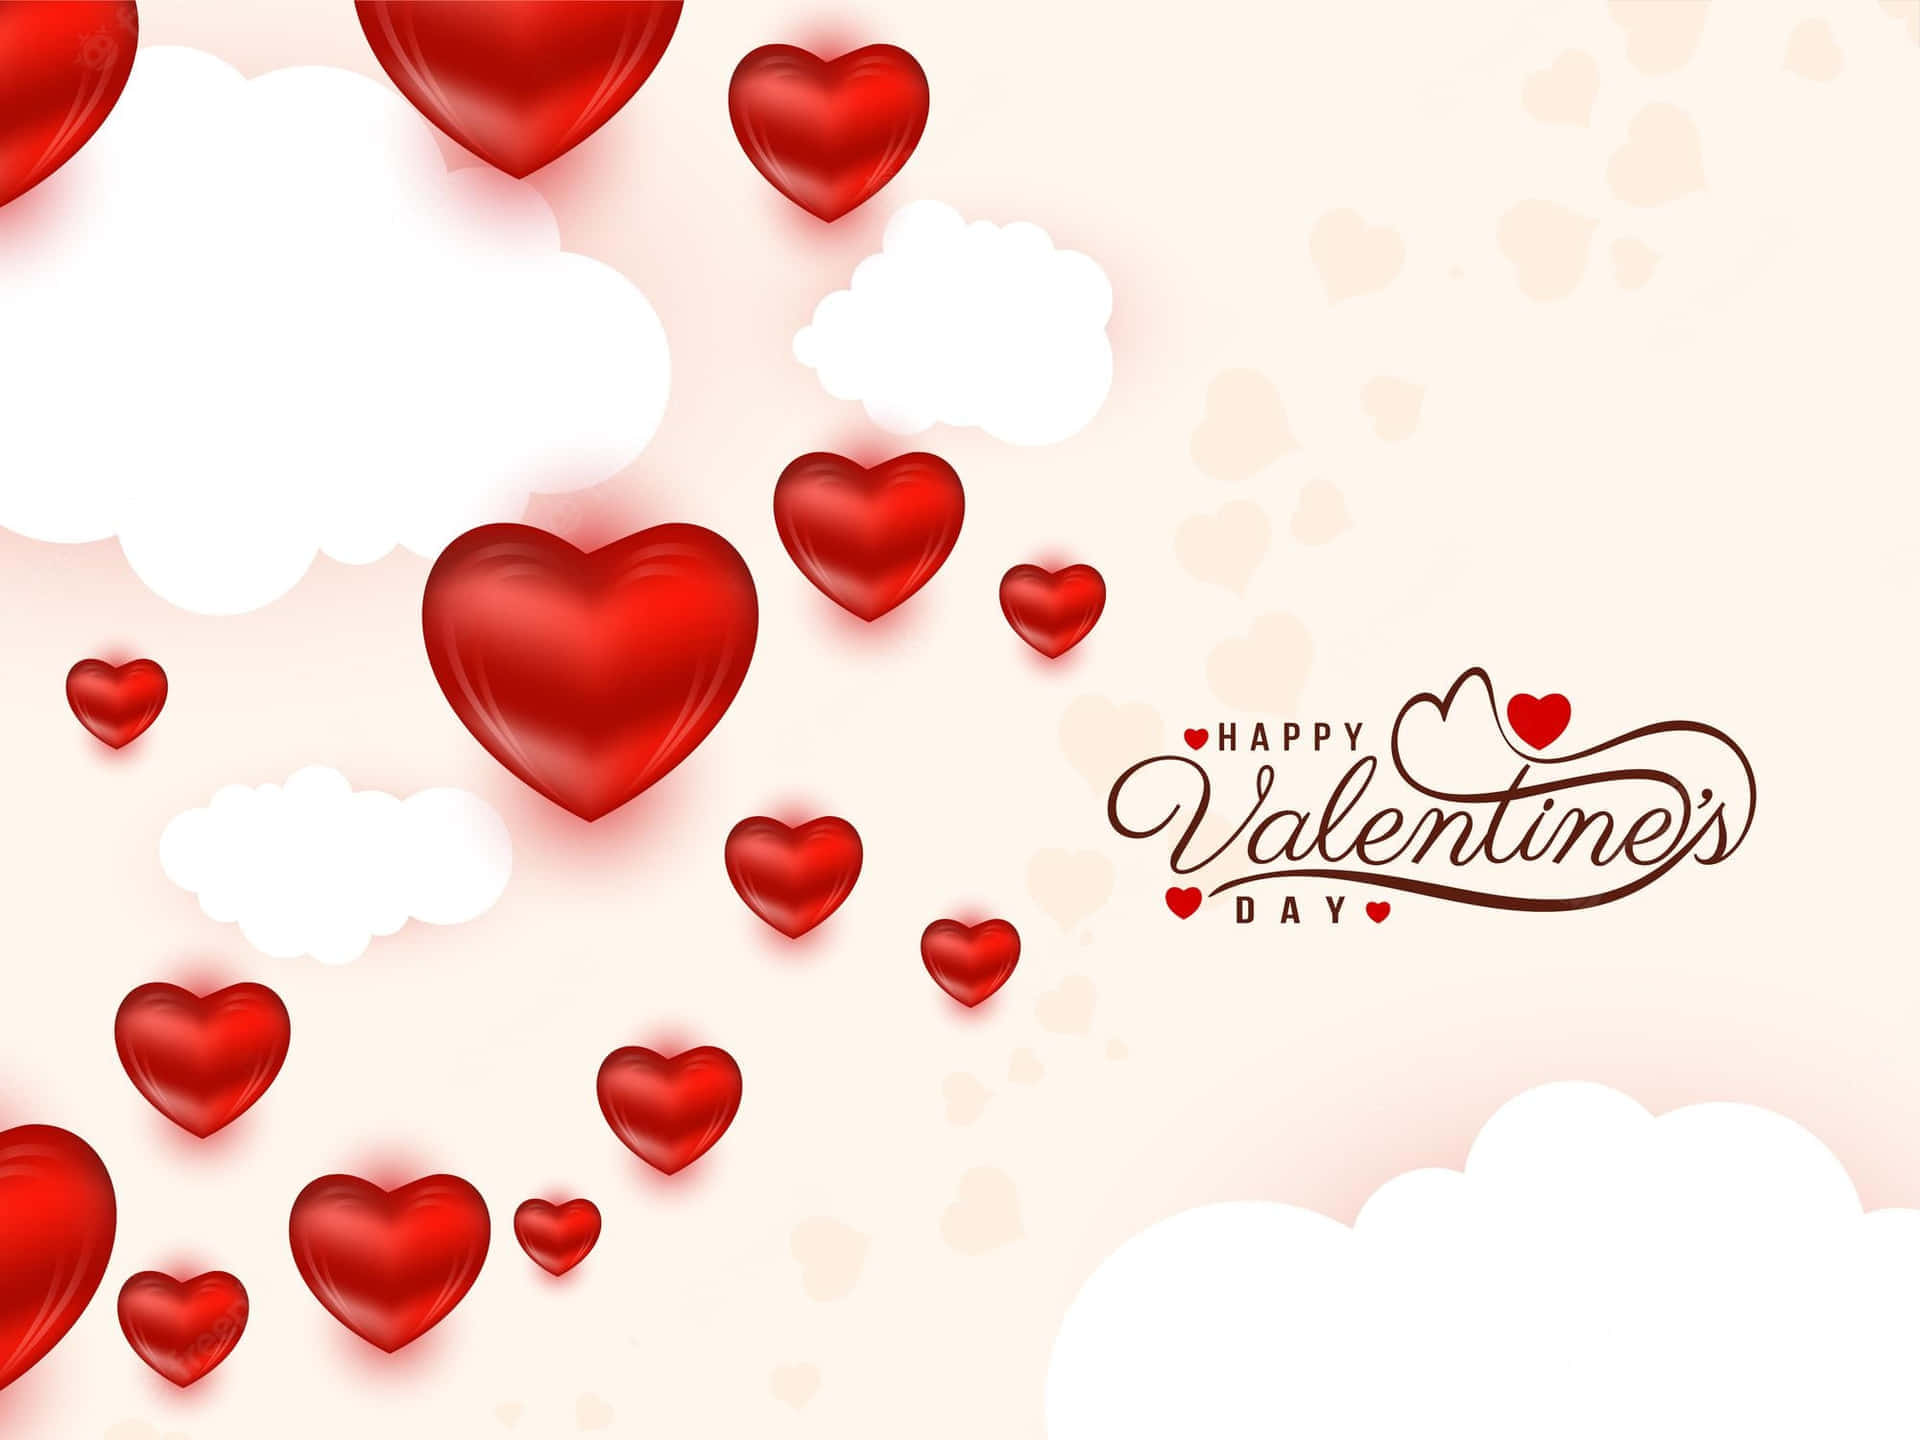 Cute Kawaii Love Print-Happy Valentines Day-Romantic Love Red